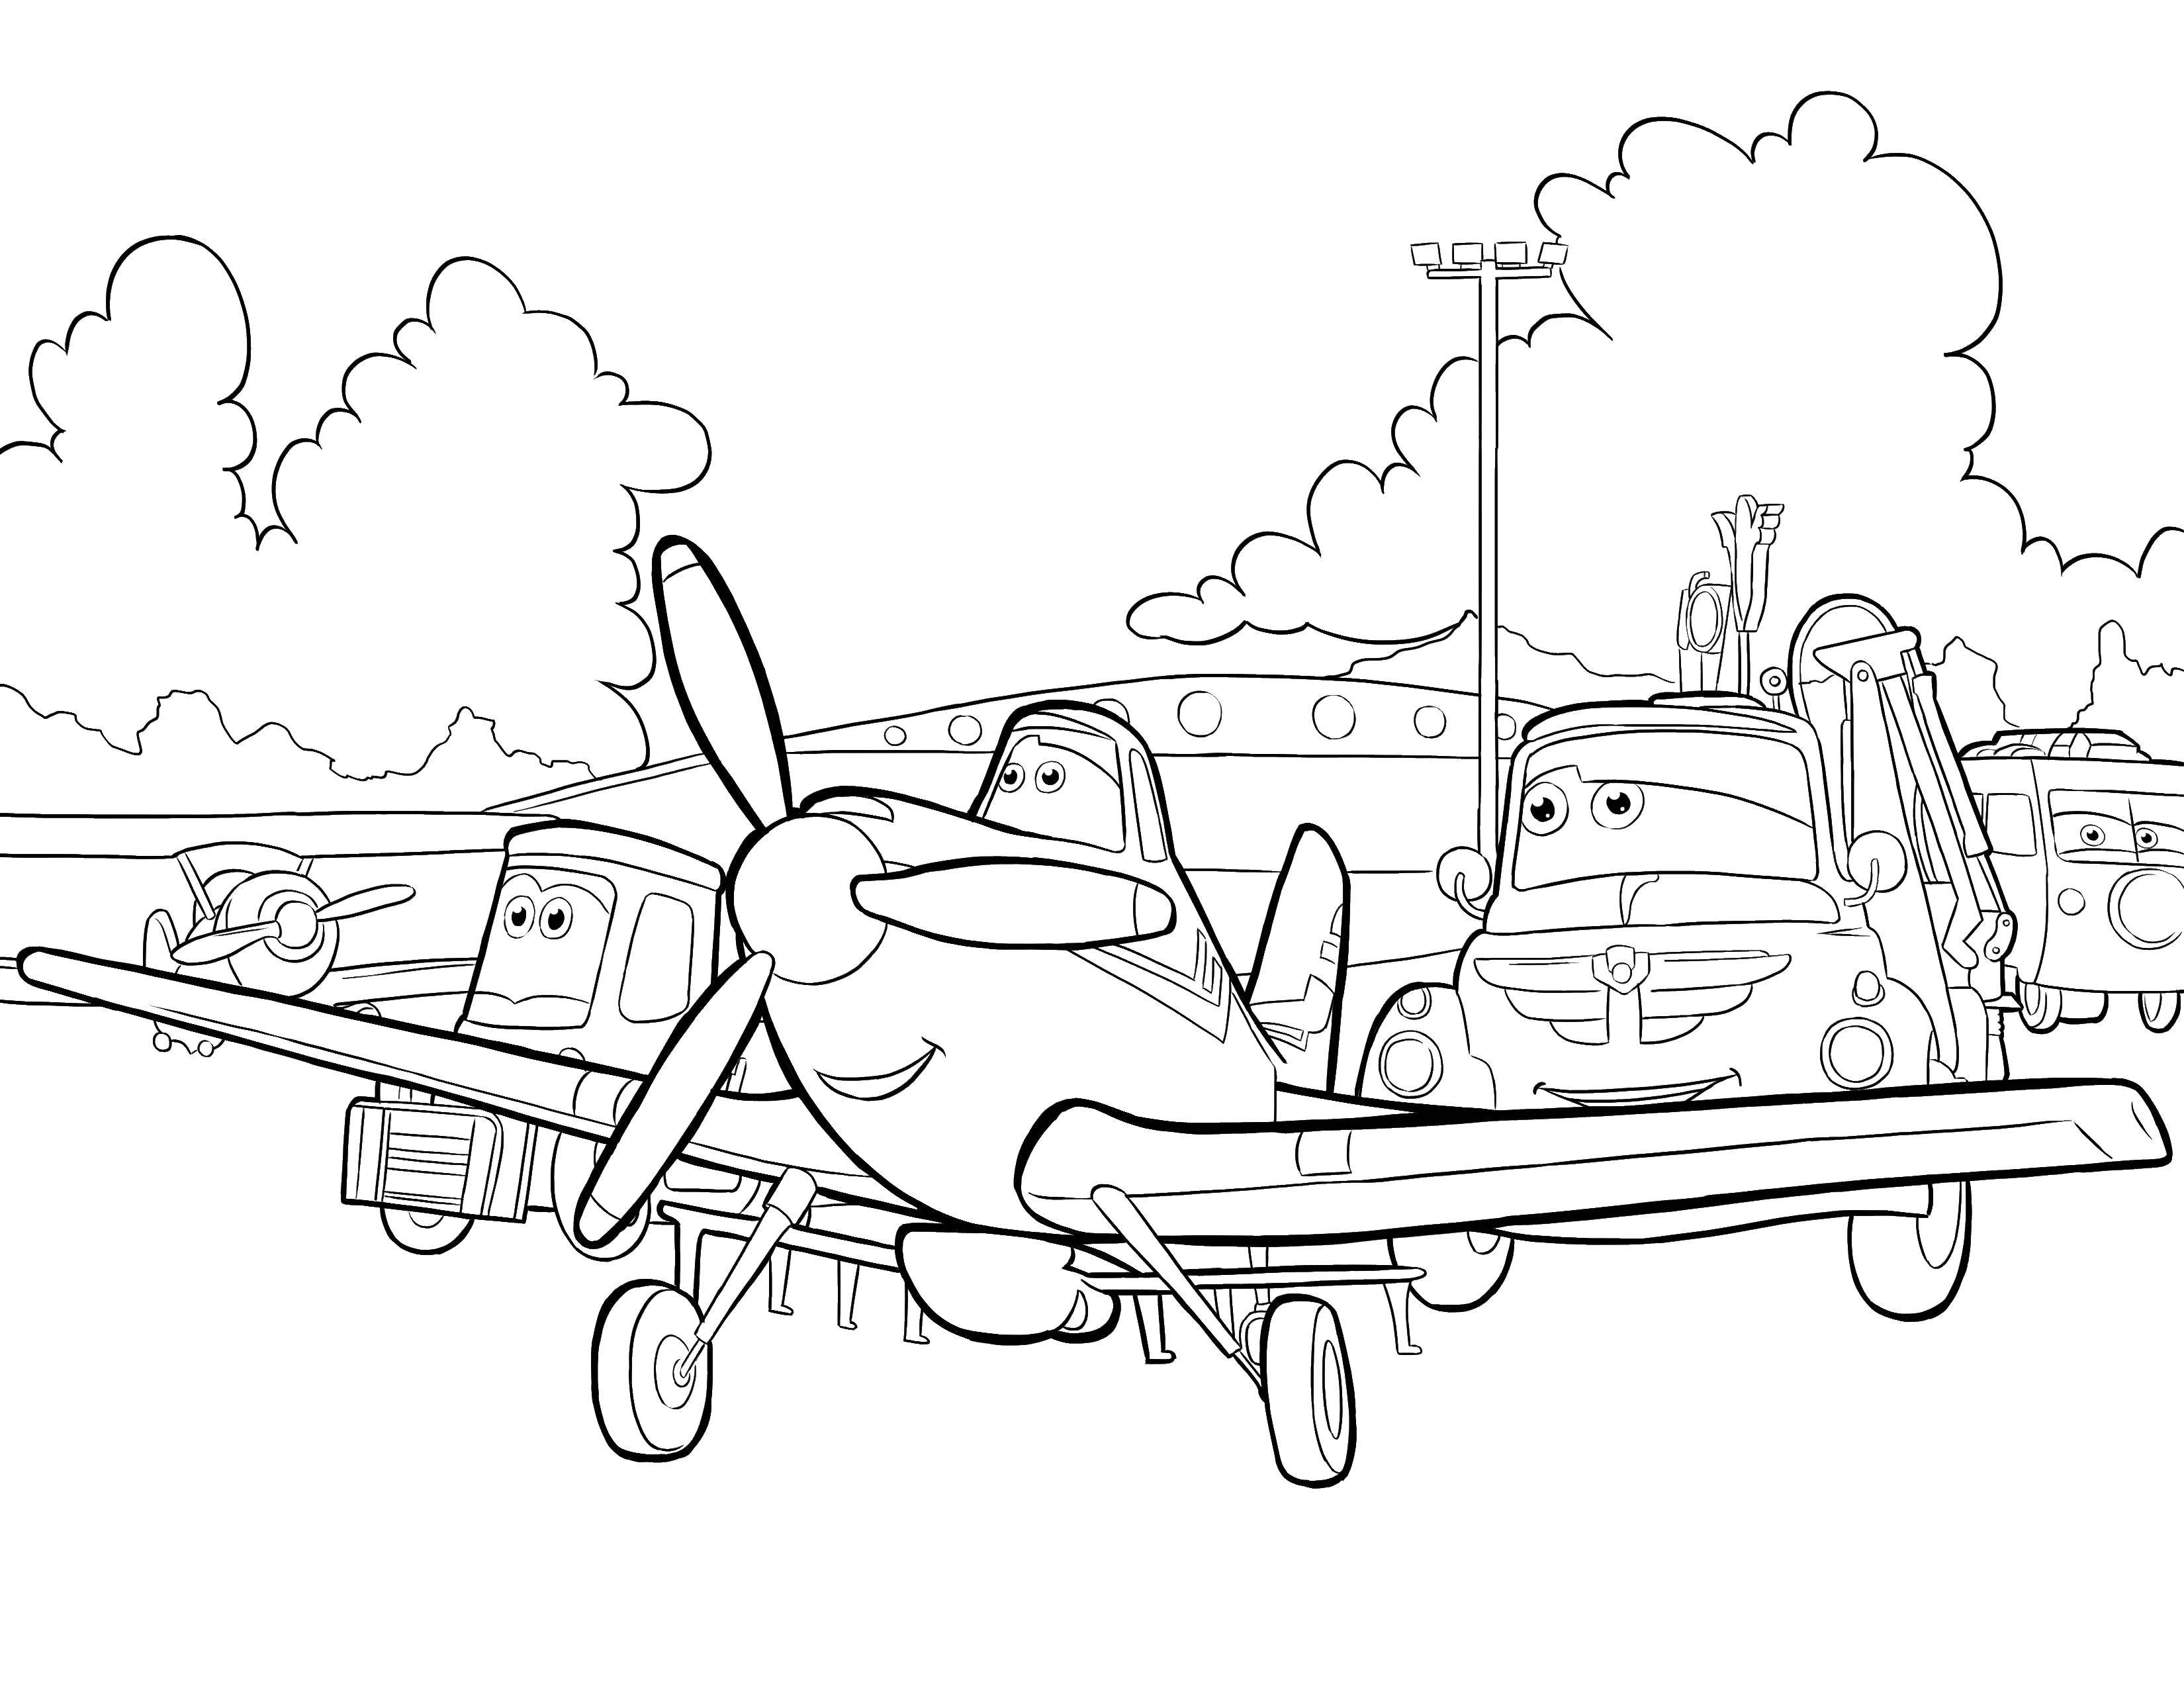 Coloring The plane and cars. Category Wheelbarrows. Tags:  Wheelbarrow, machine, airplane.